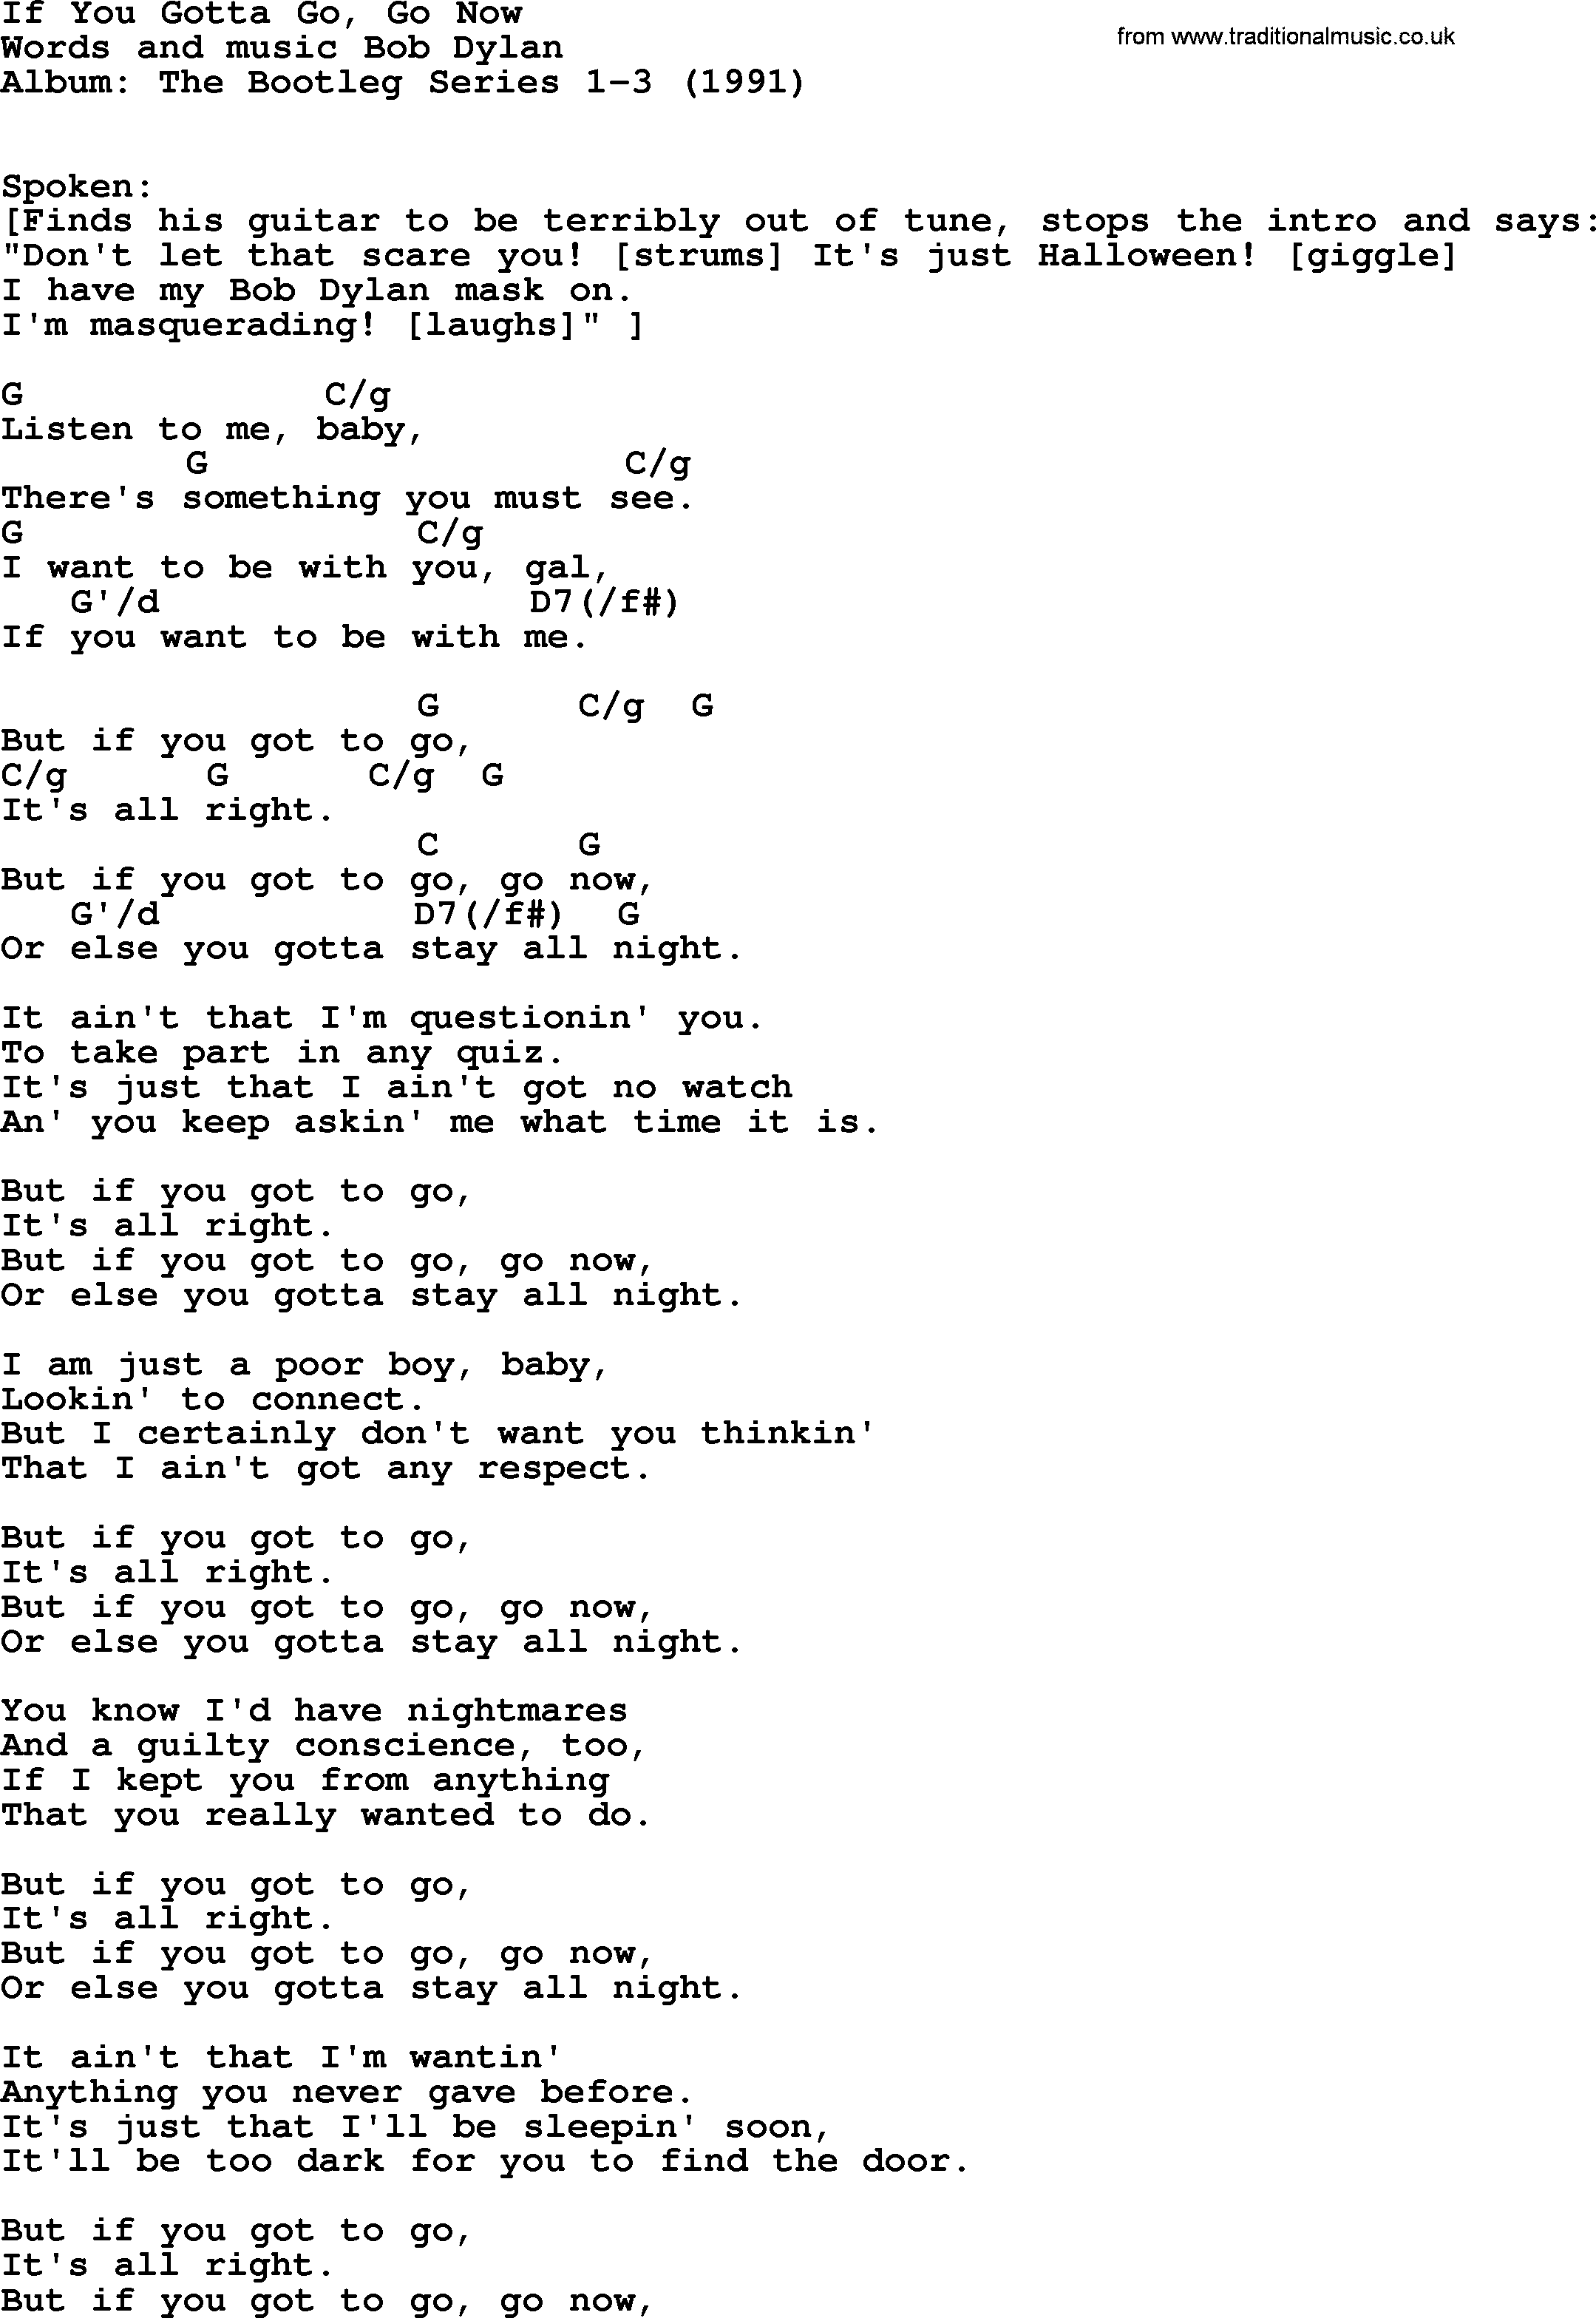 Bob Dylan song, lyrics with chords - If You Gotta Go, Go Now